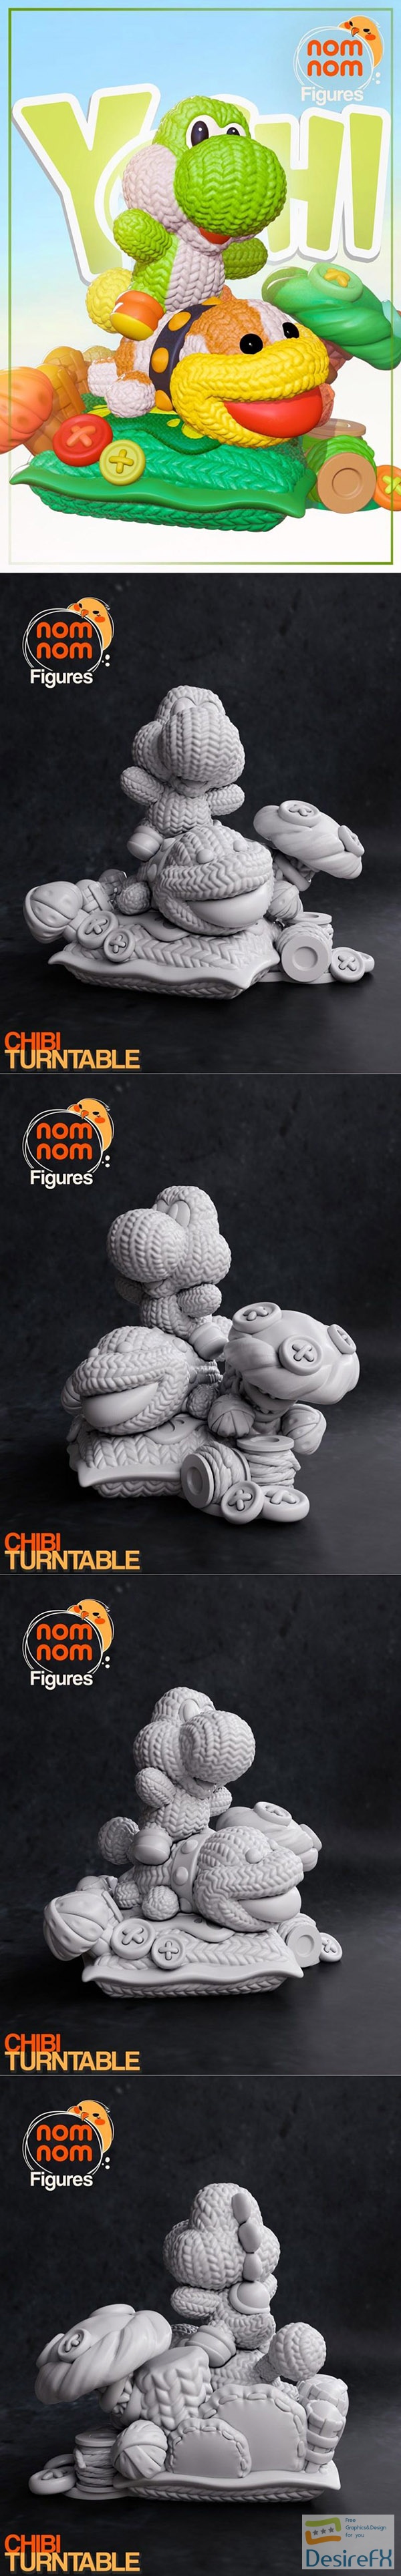 Nomnom Figures – Chibi Yoshi – Yoshi Woolly World – 3D Print